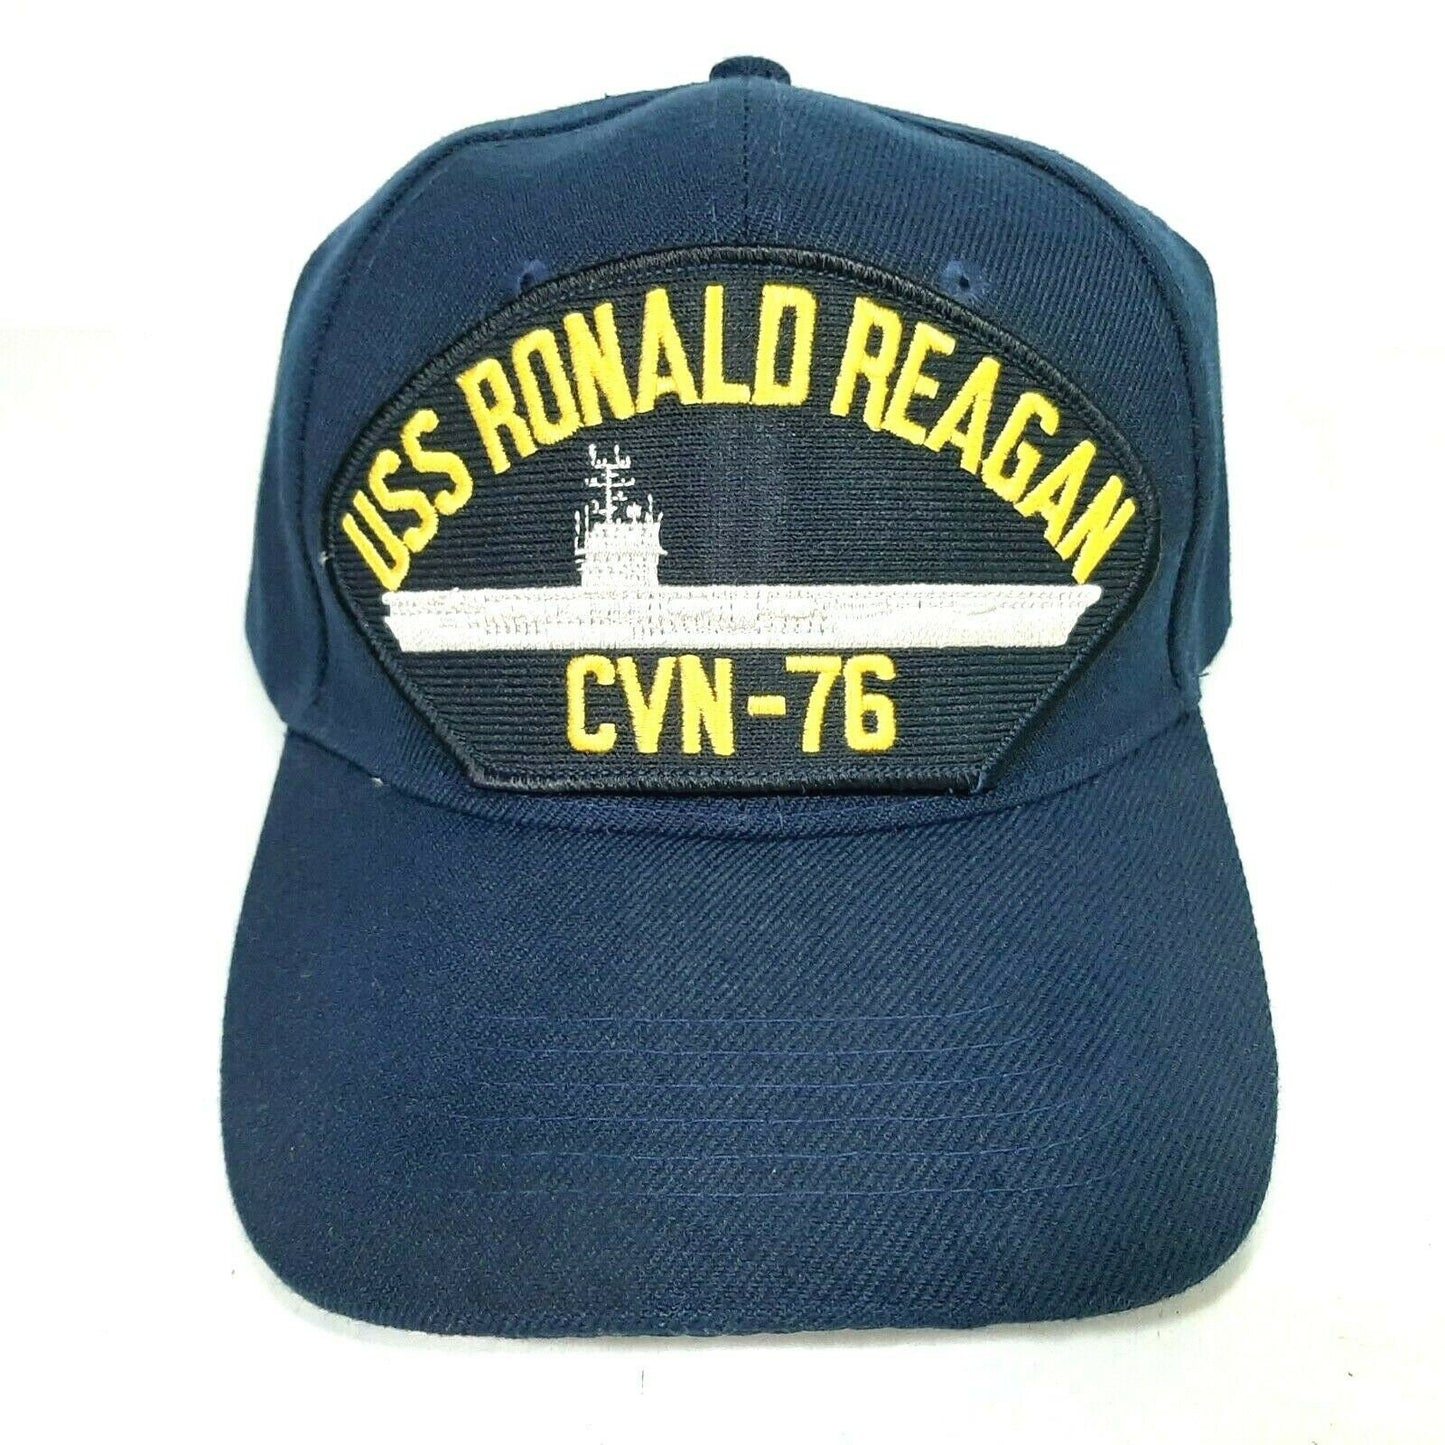 U.S. Navy USS Ronald Reagan CVN-76 Men's Cap Patch Hat Navy Blue Acrylic